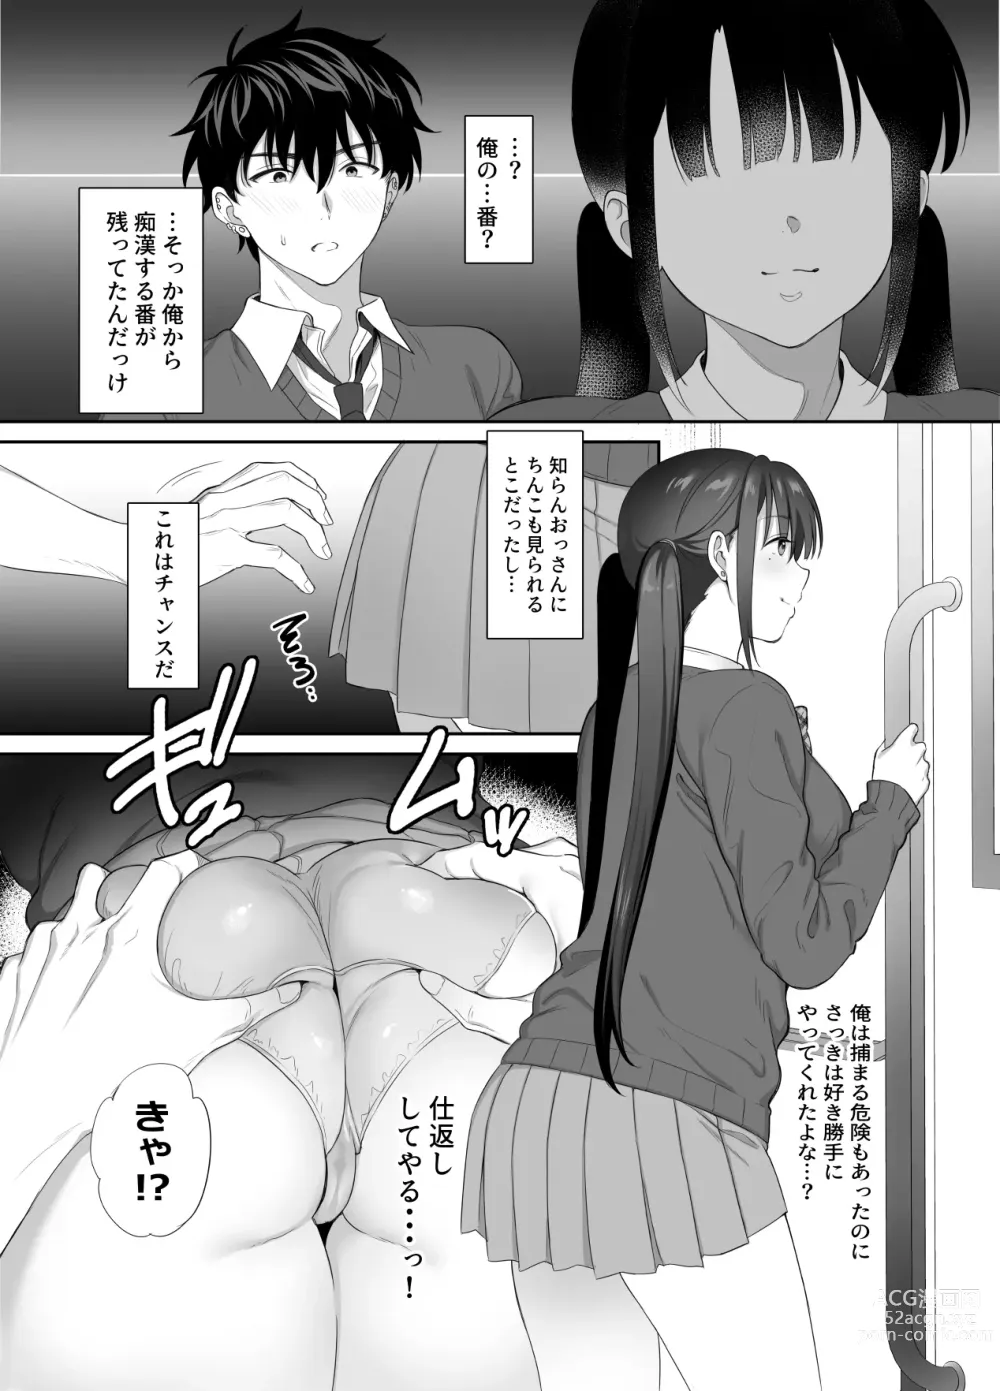 Page 32 of doujinshi 廃墟で地雷女子と夜中じゅう中出しセックスした話2